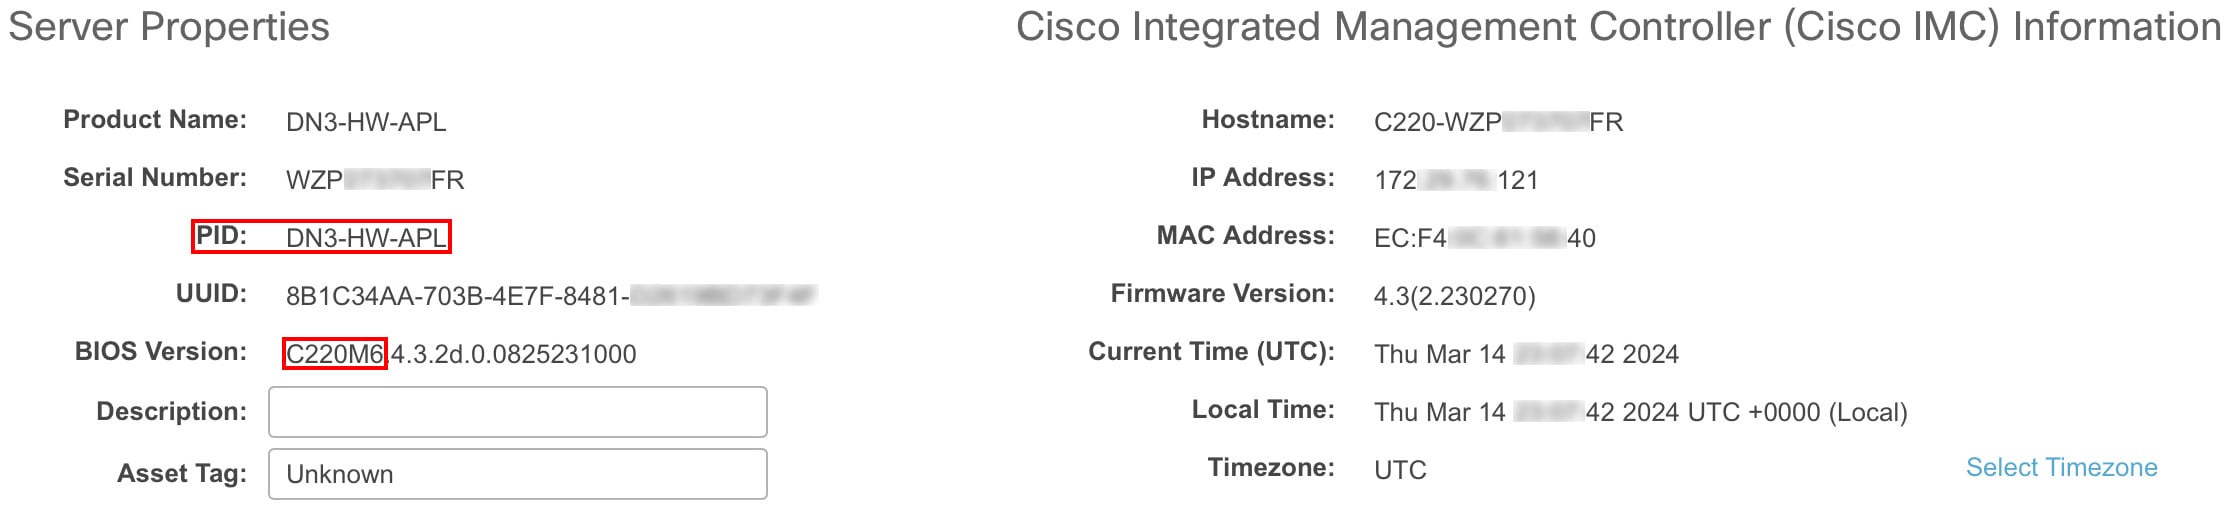 Cisco Integrated Management Controller - Server Properties